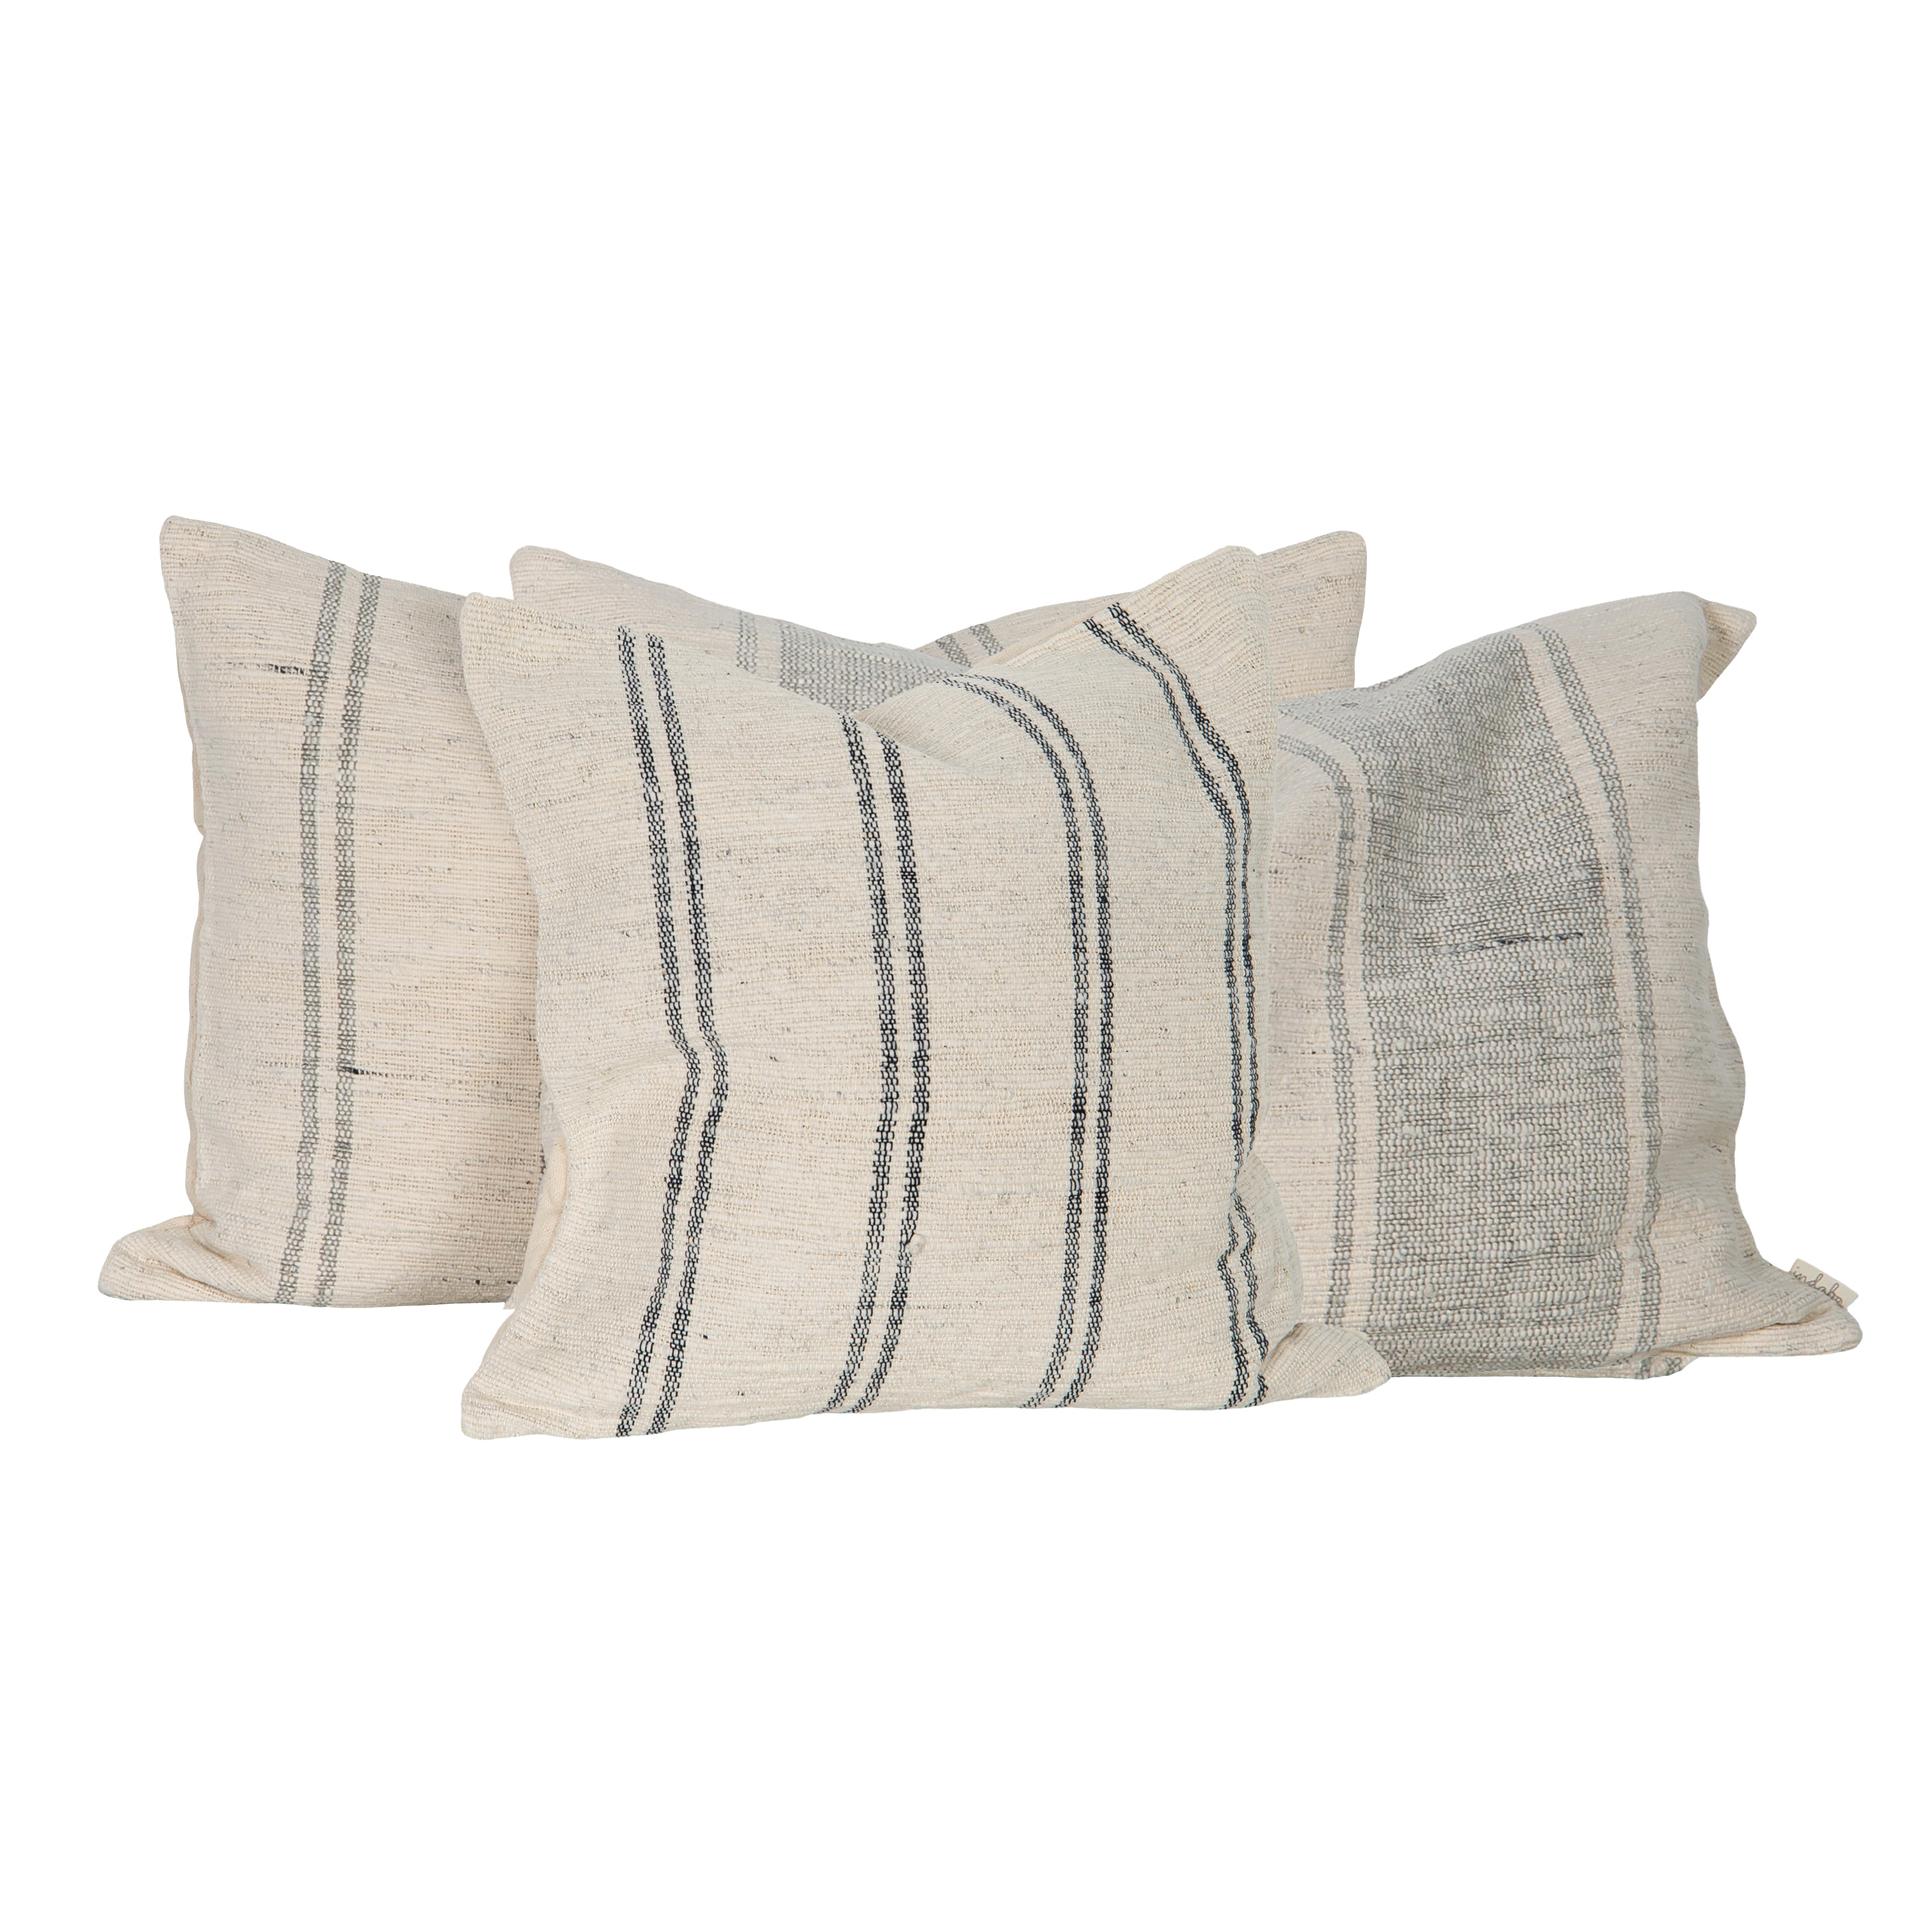 Annica Grey Pillows (Set of 3)